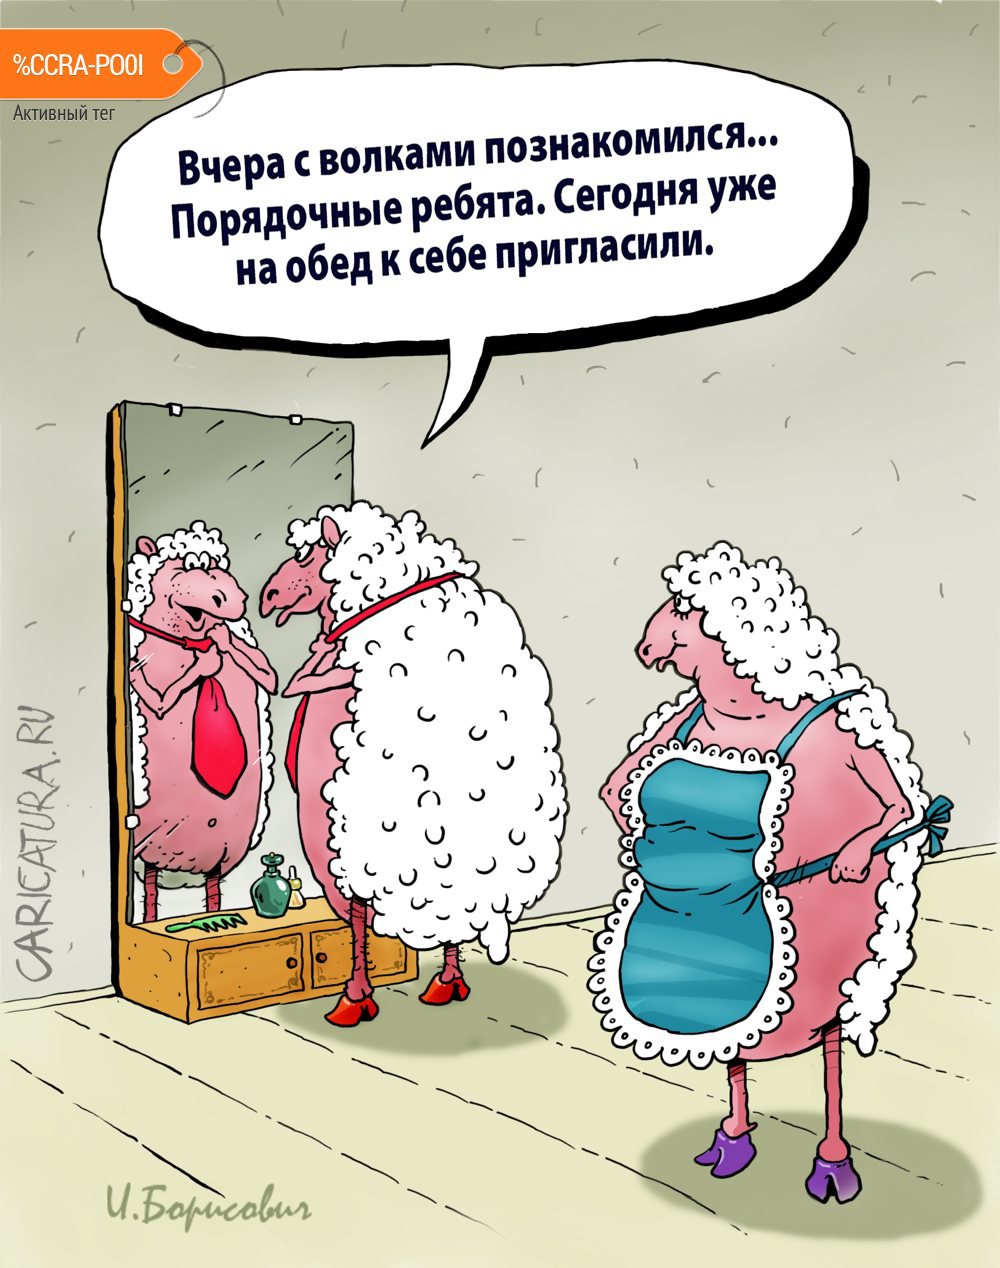 Карикатура "Овца у зеркала", Игорь Елистратов